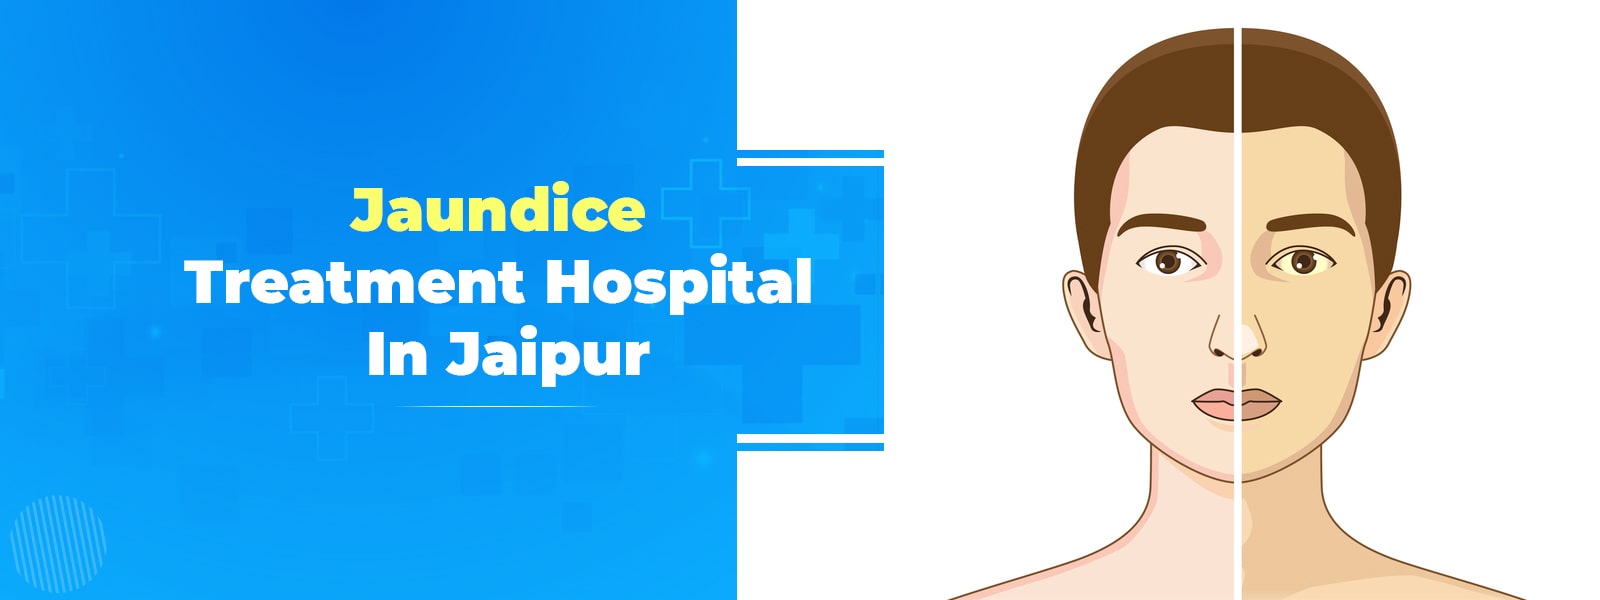 Jaundice Treatment Hospital in Jaipur